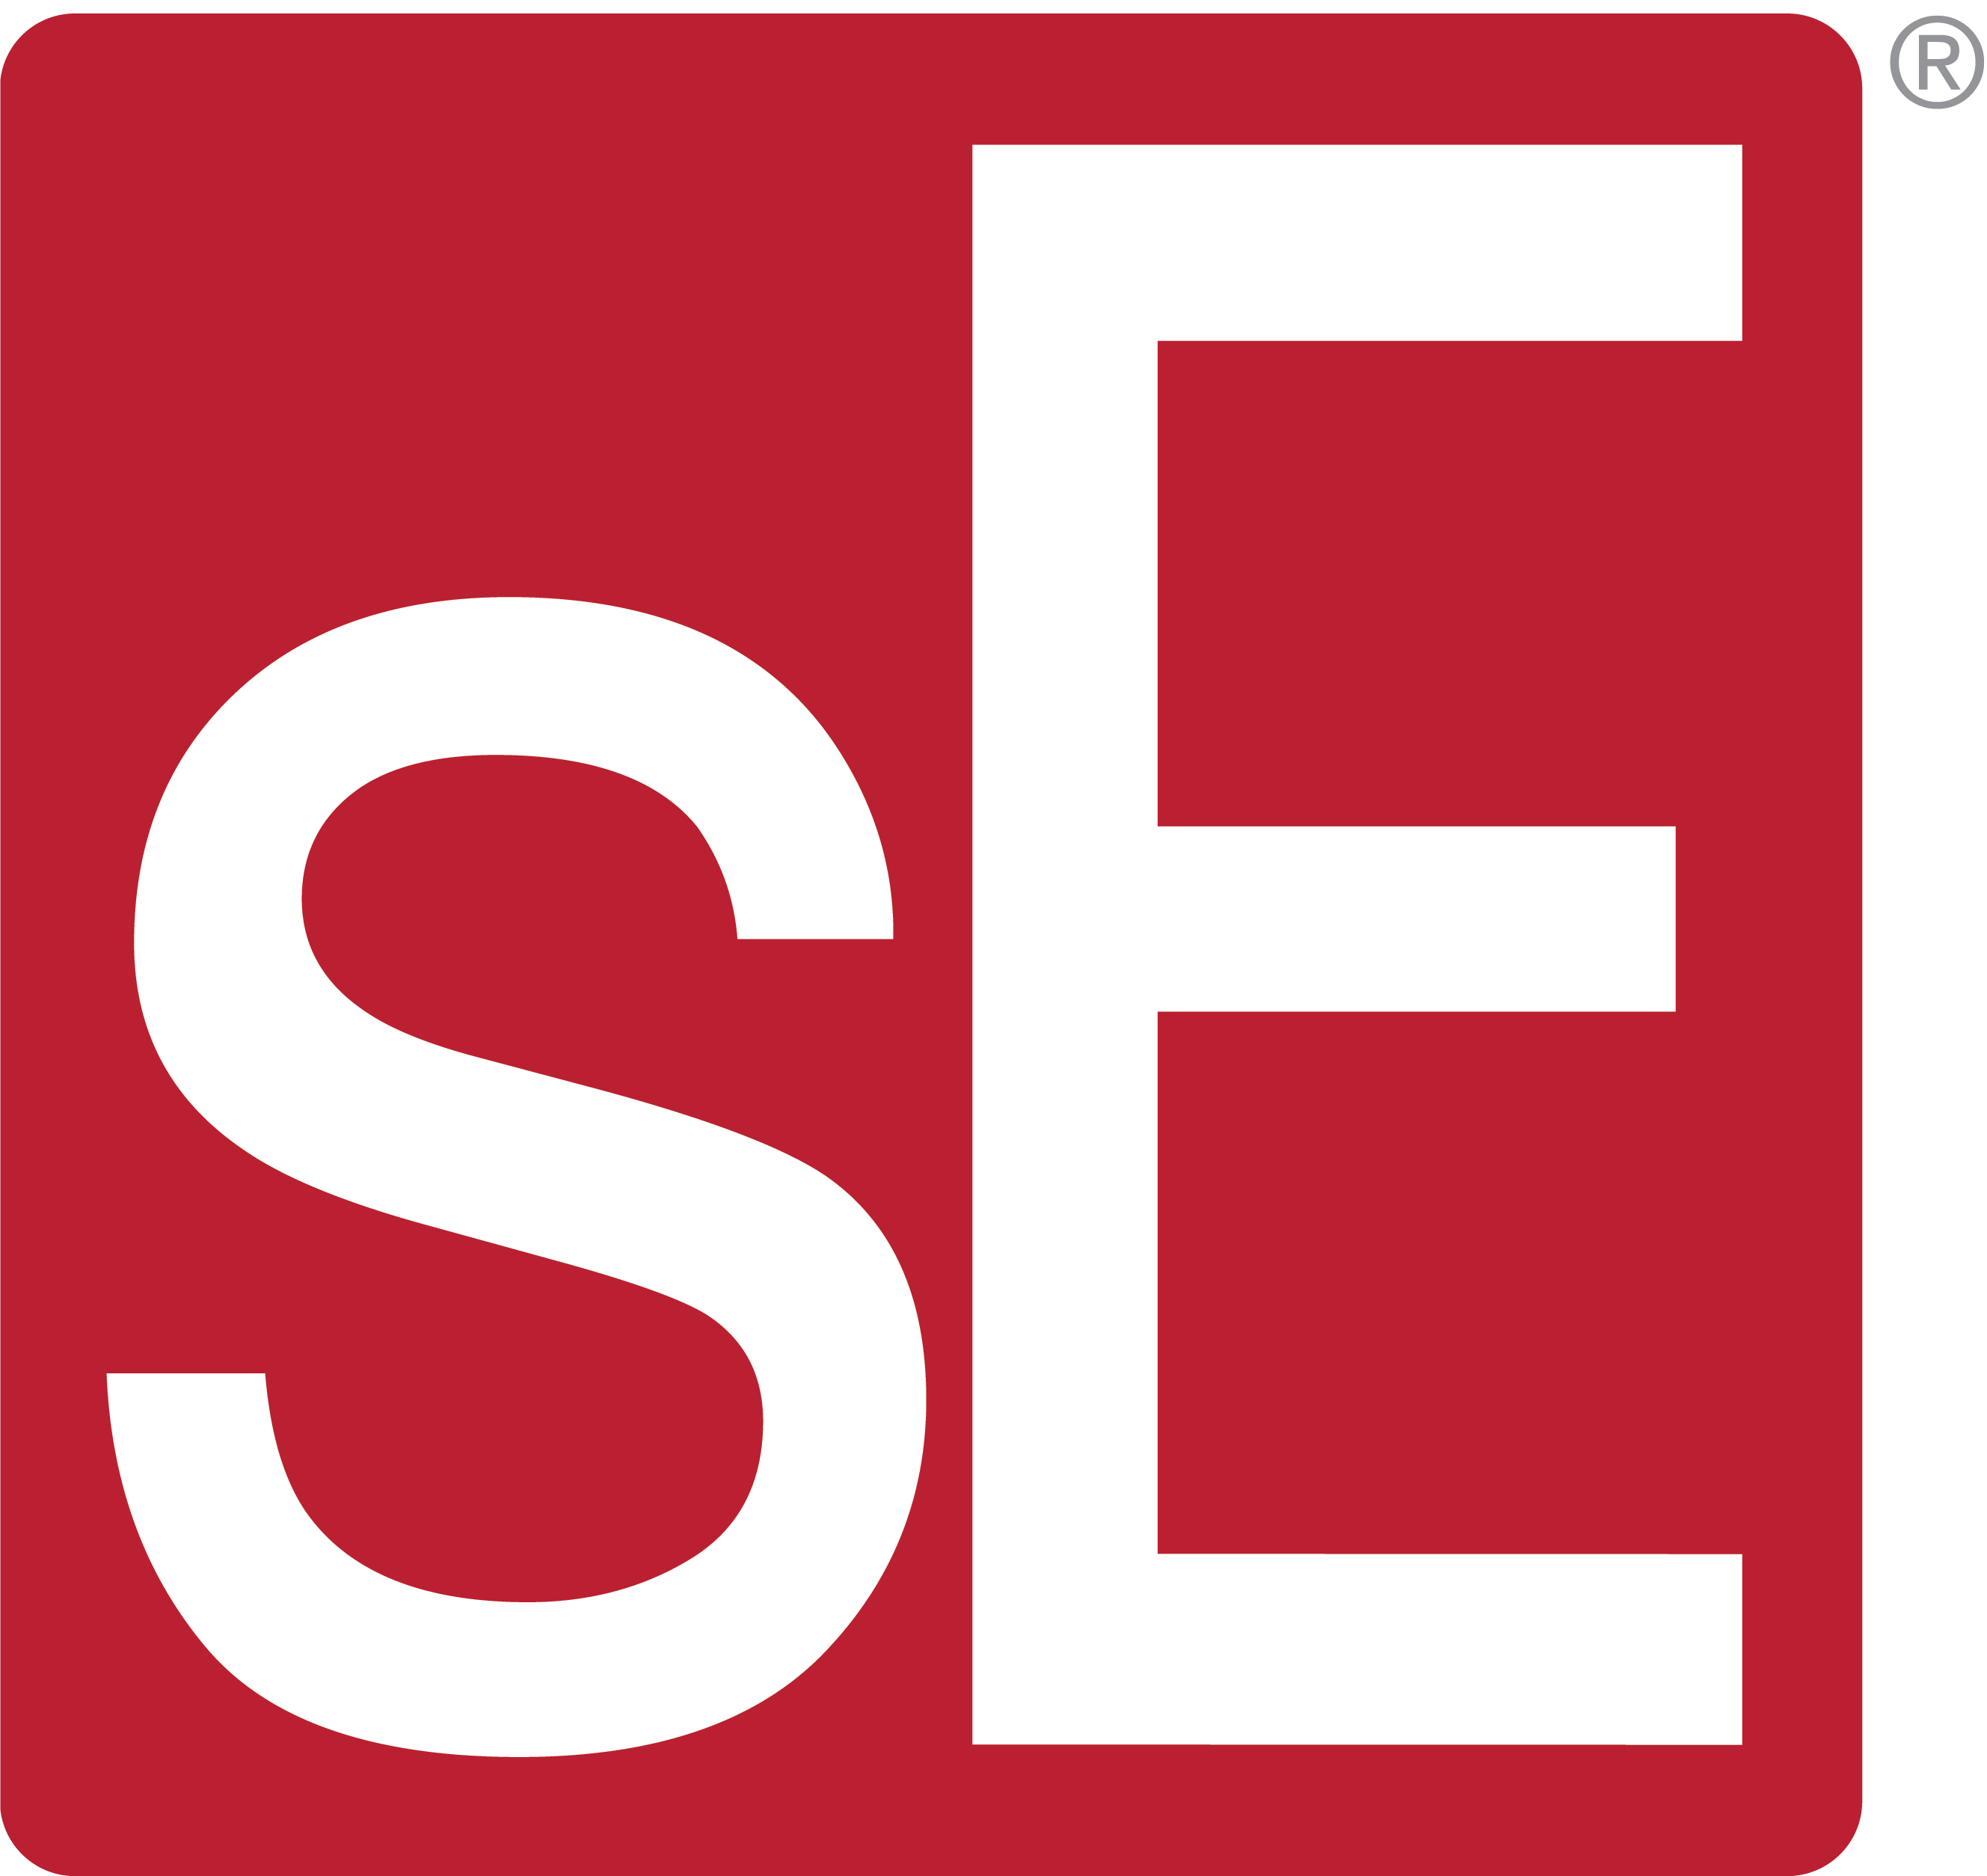 sE-logo-2015